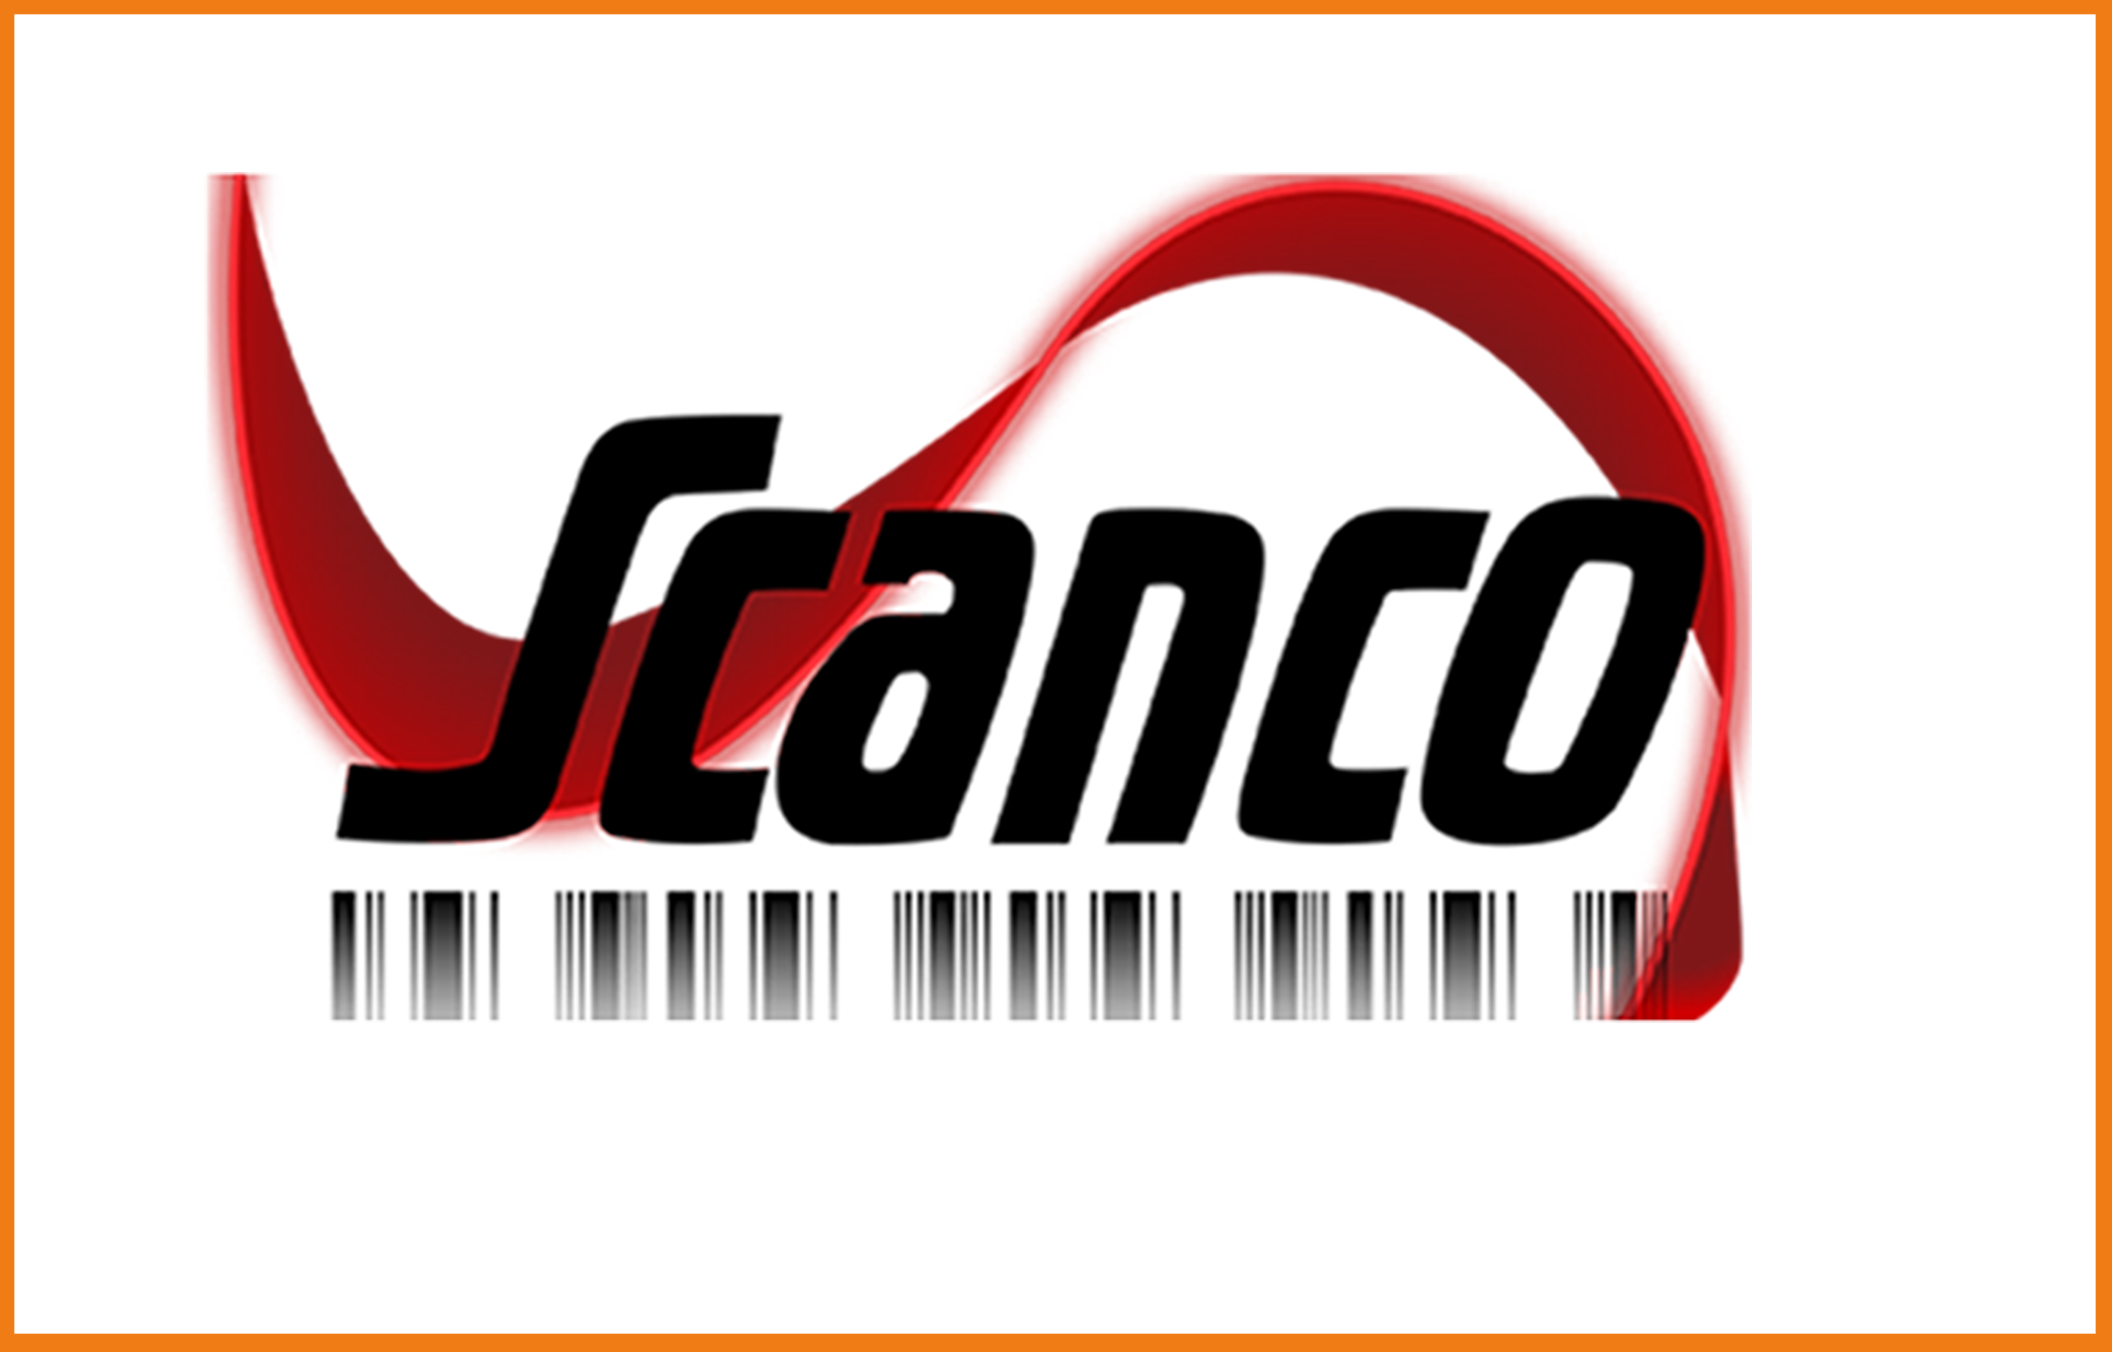 SCANCO VBCC logo